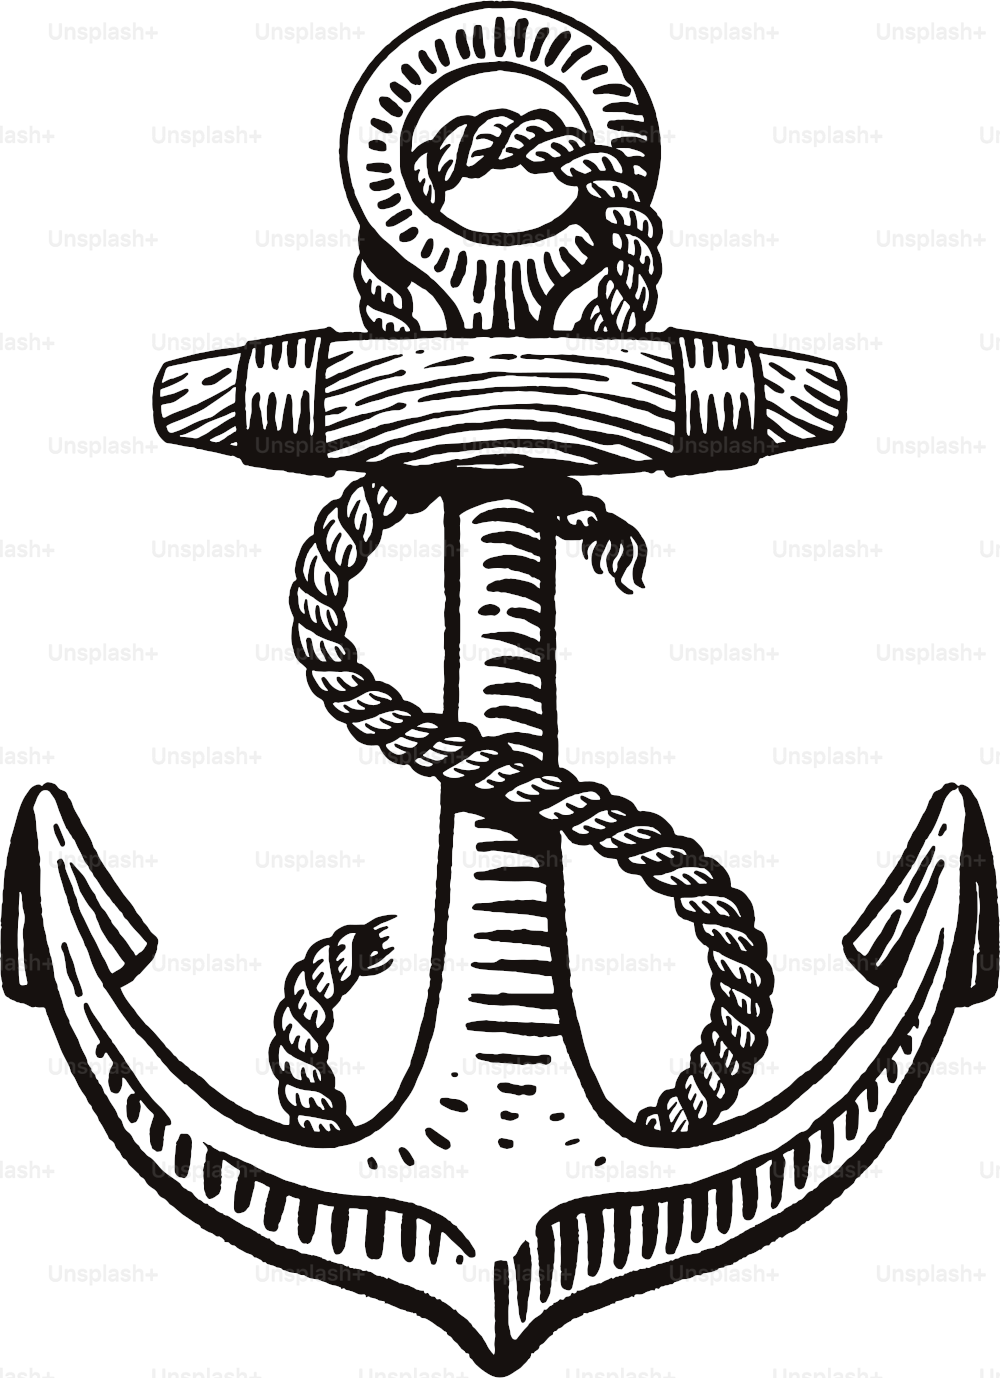 Old style illustration of maritime symbol